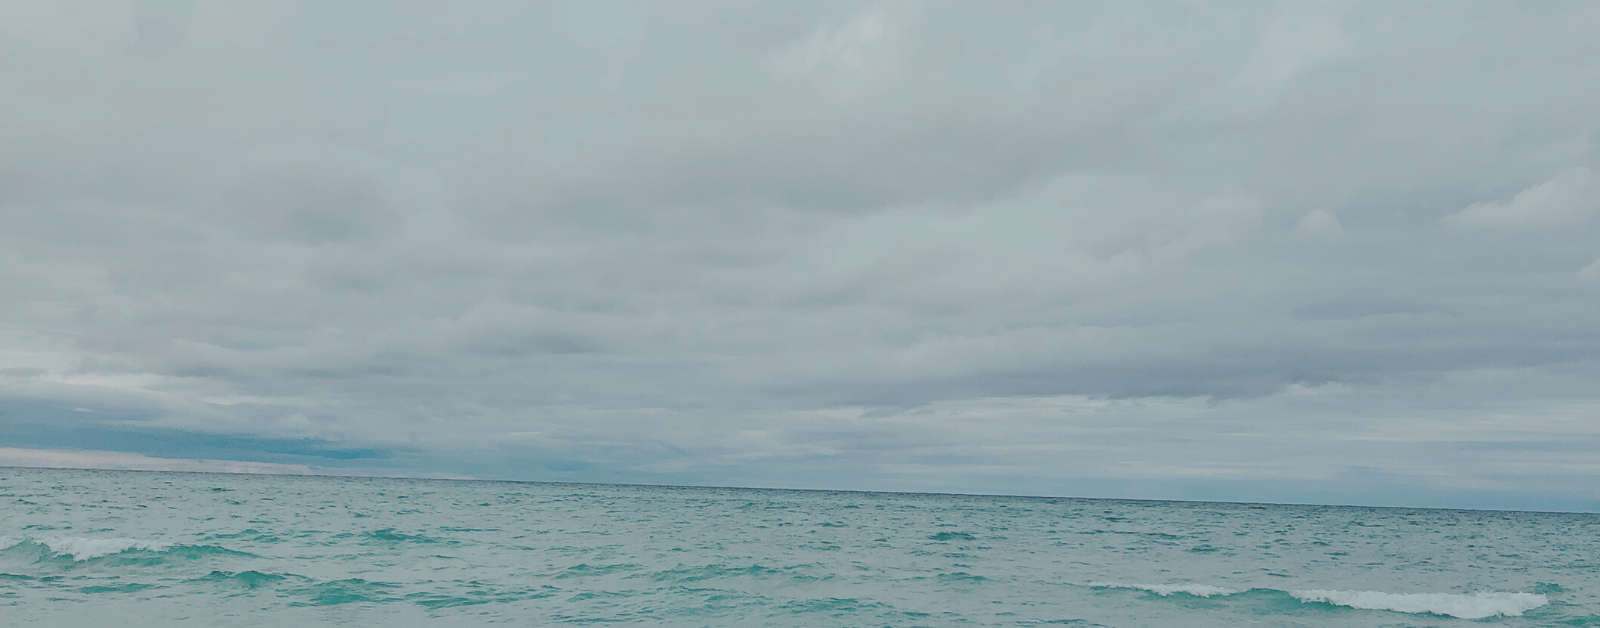 a blue lake meets a stormy horizon